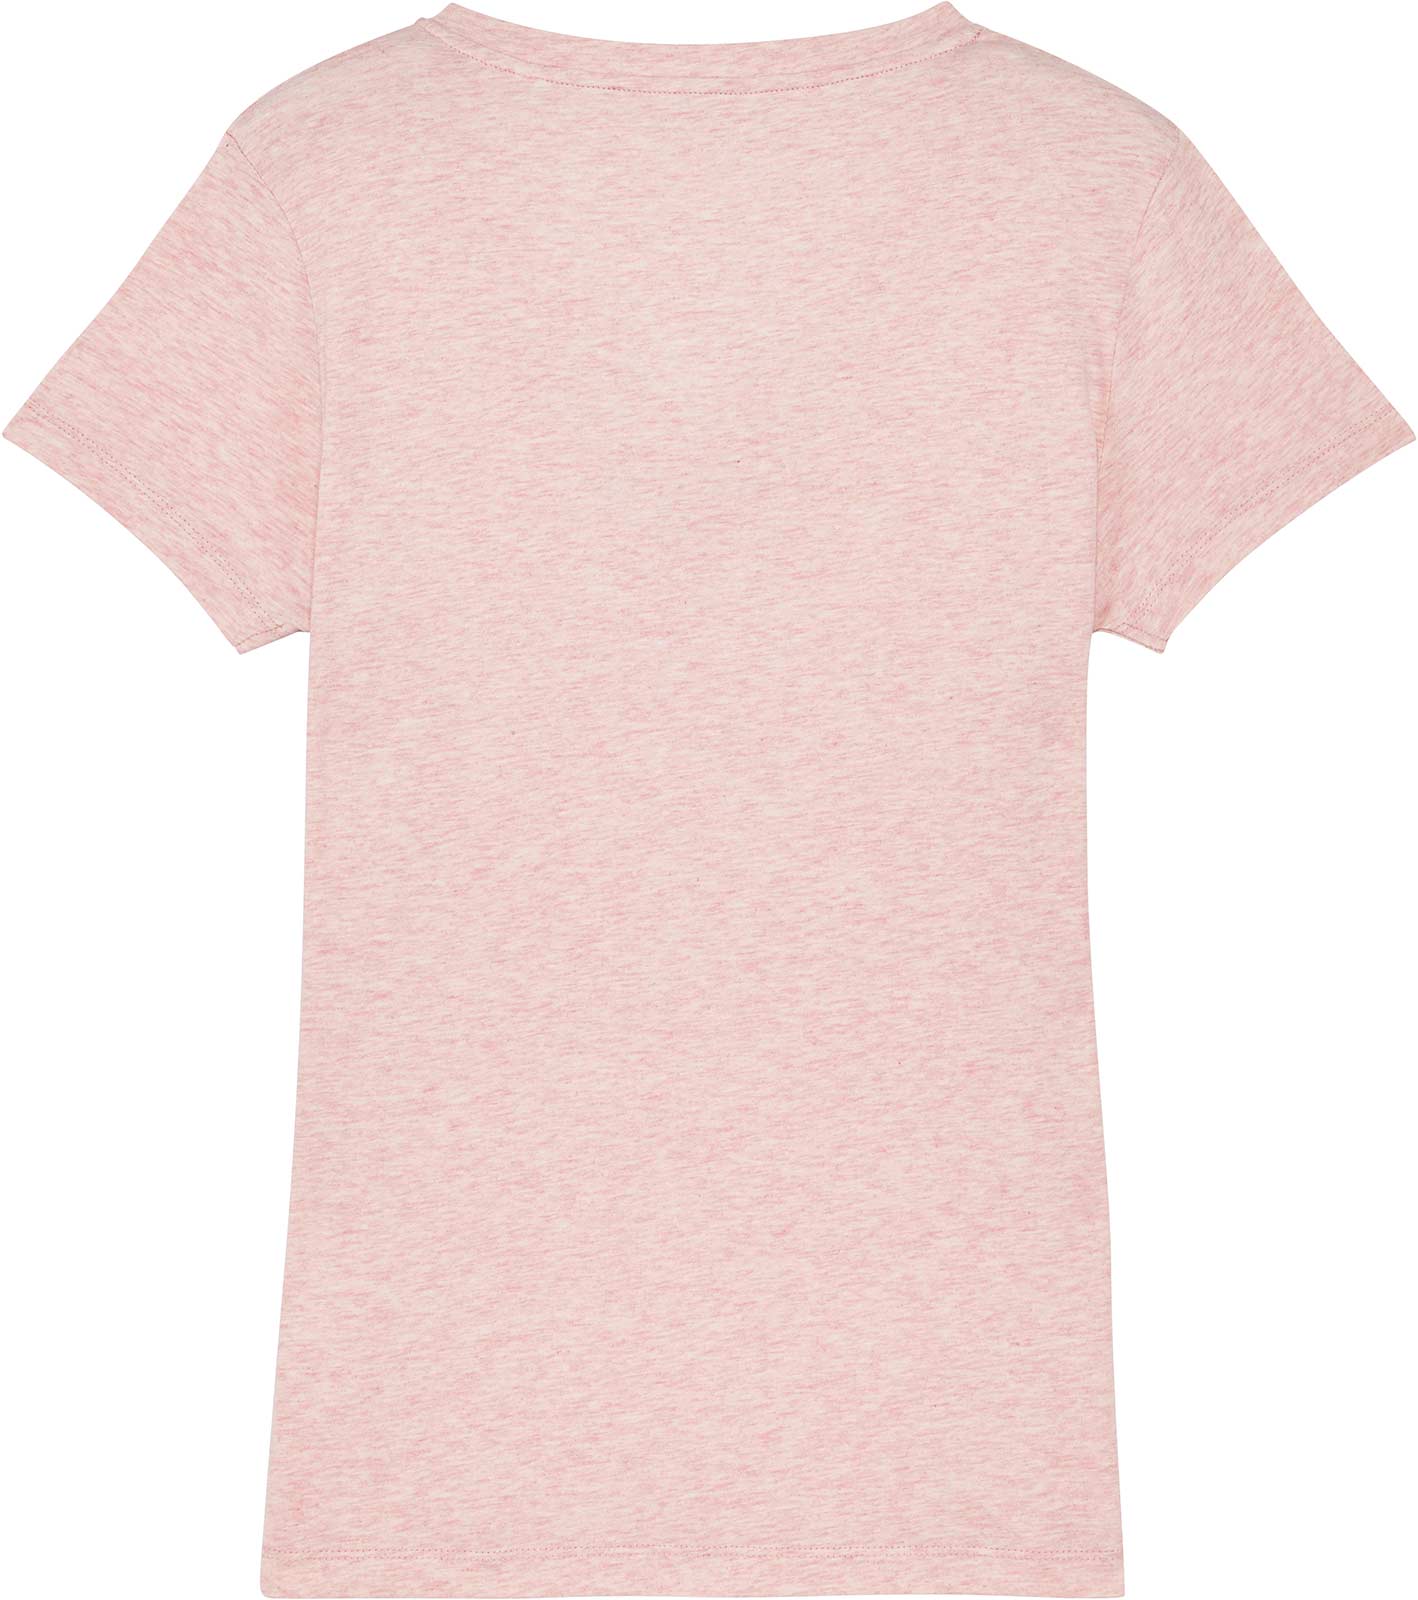 Rosa meliertes V-Neck T-Shirt aus 100% Biobaumwolle